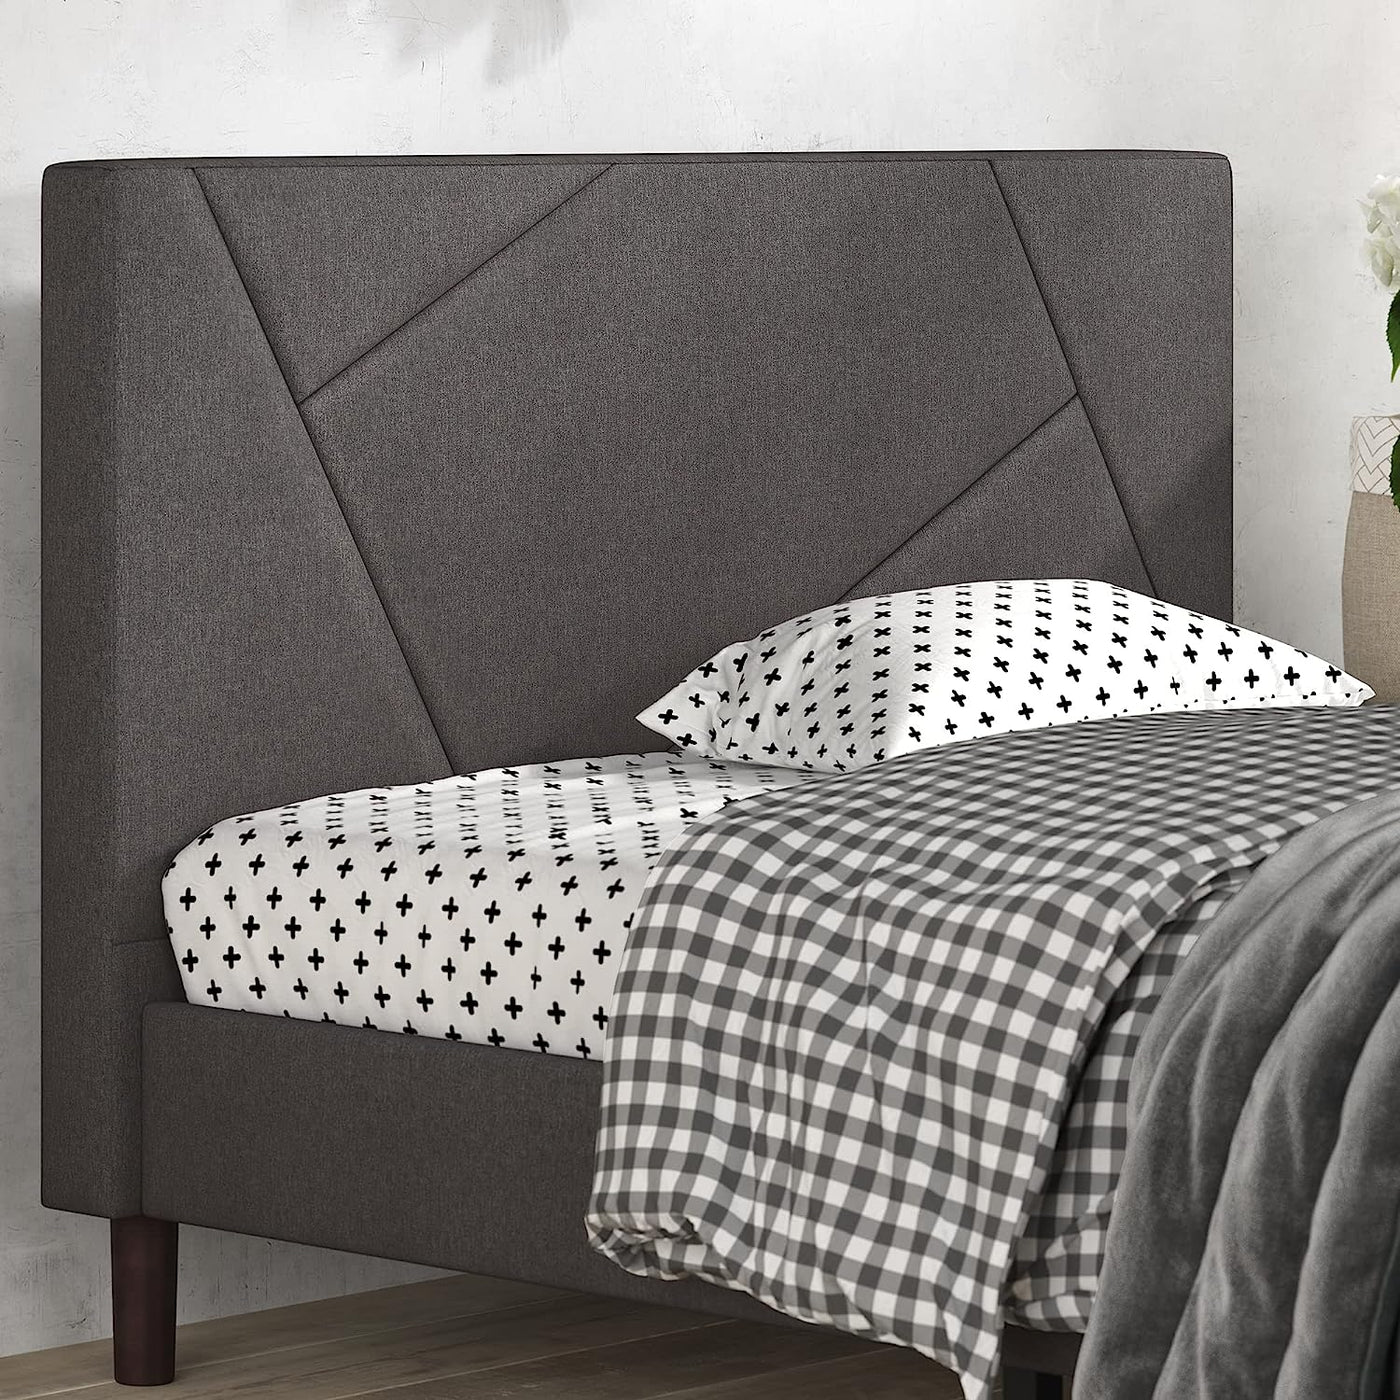 Zinus Judy Upholstered Platform Bed Frame / Mattress Foundation, Queen, Grey - $145